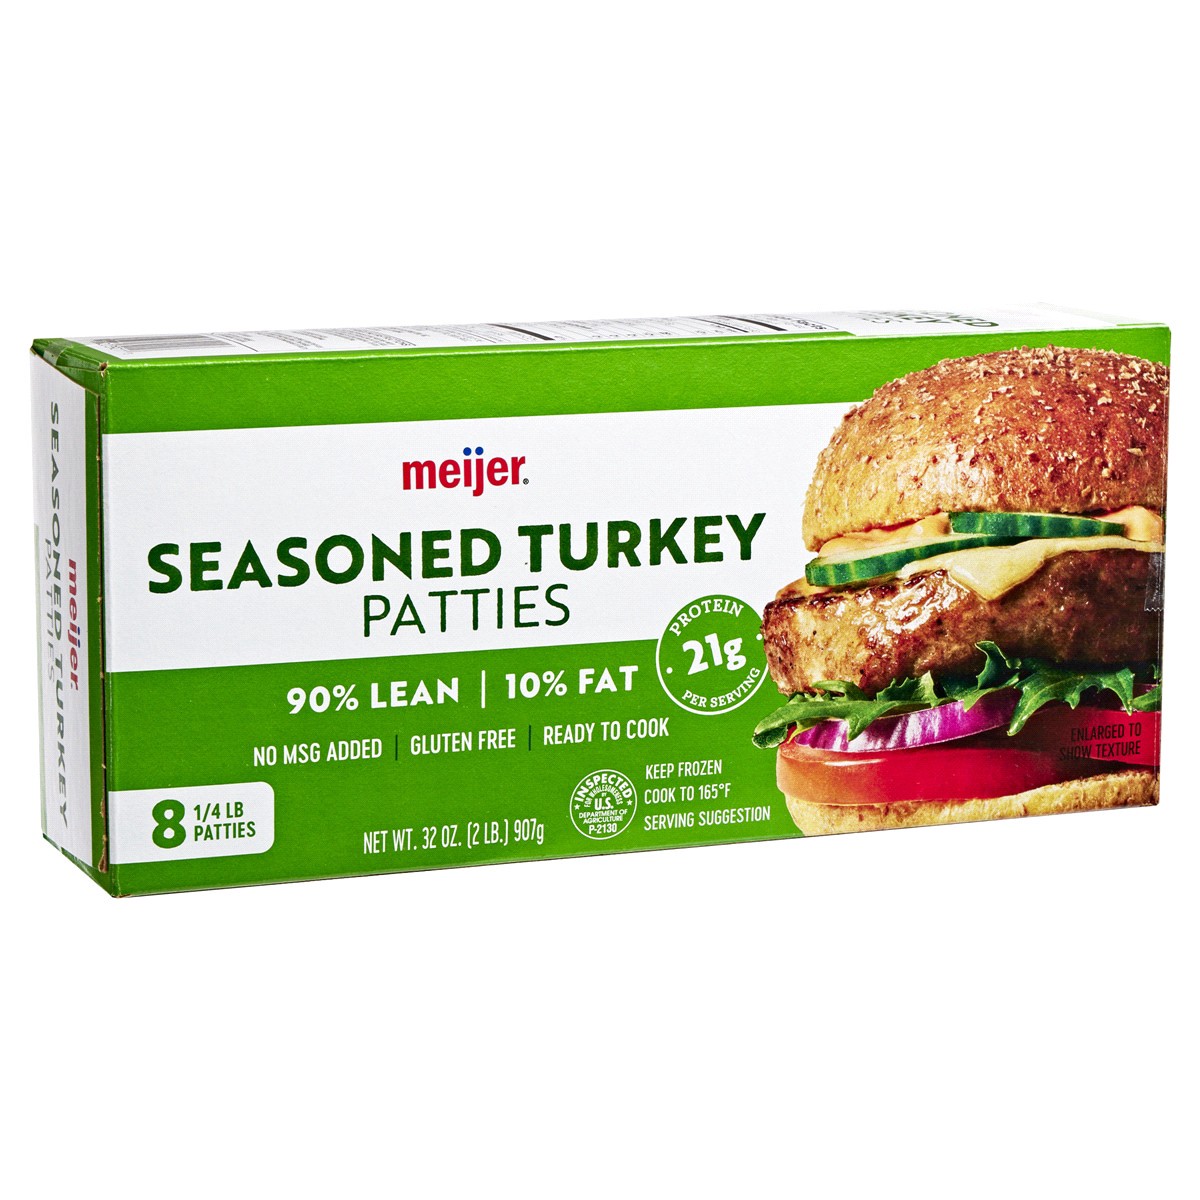 slide 5 of 29, Meijer Seasoned Turkey Patties, 8 ct